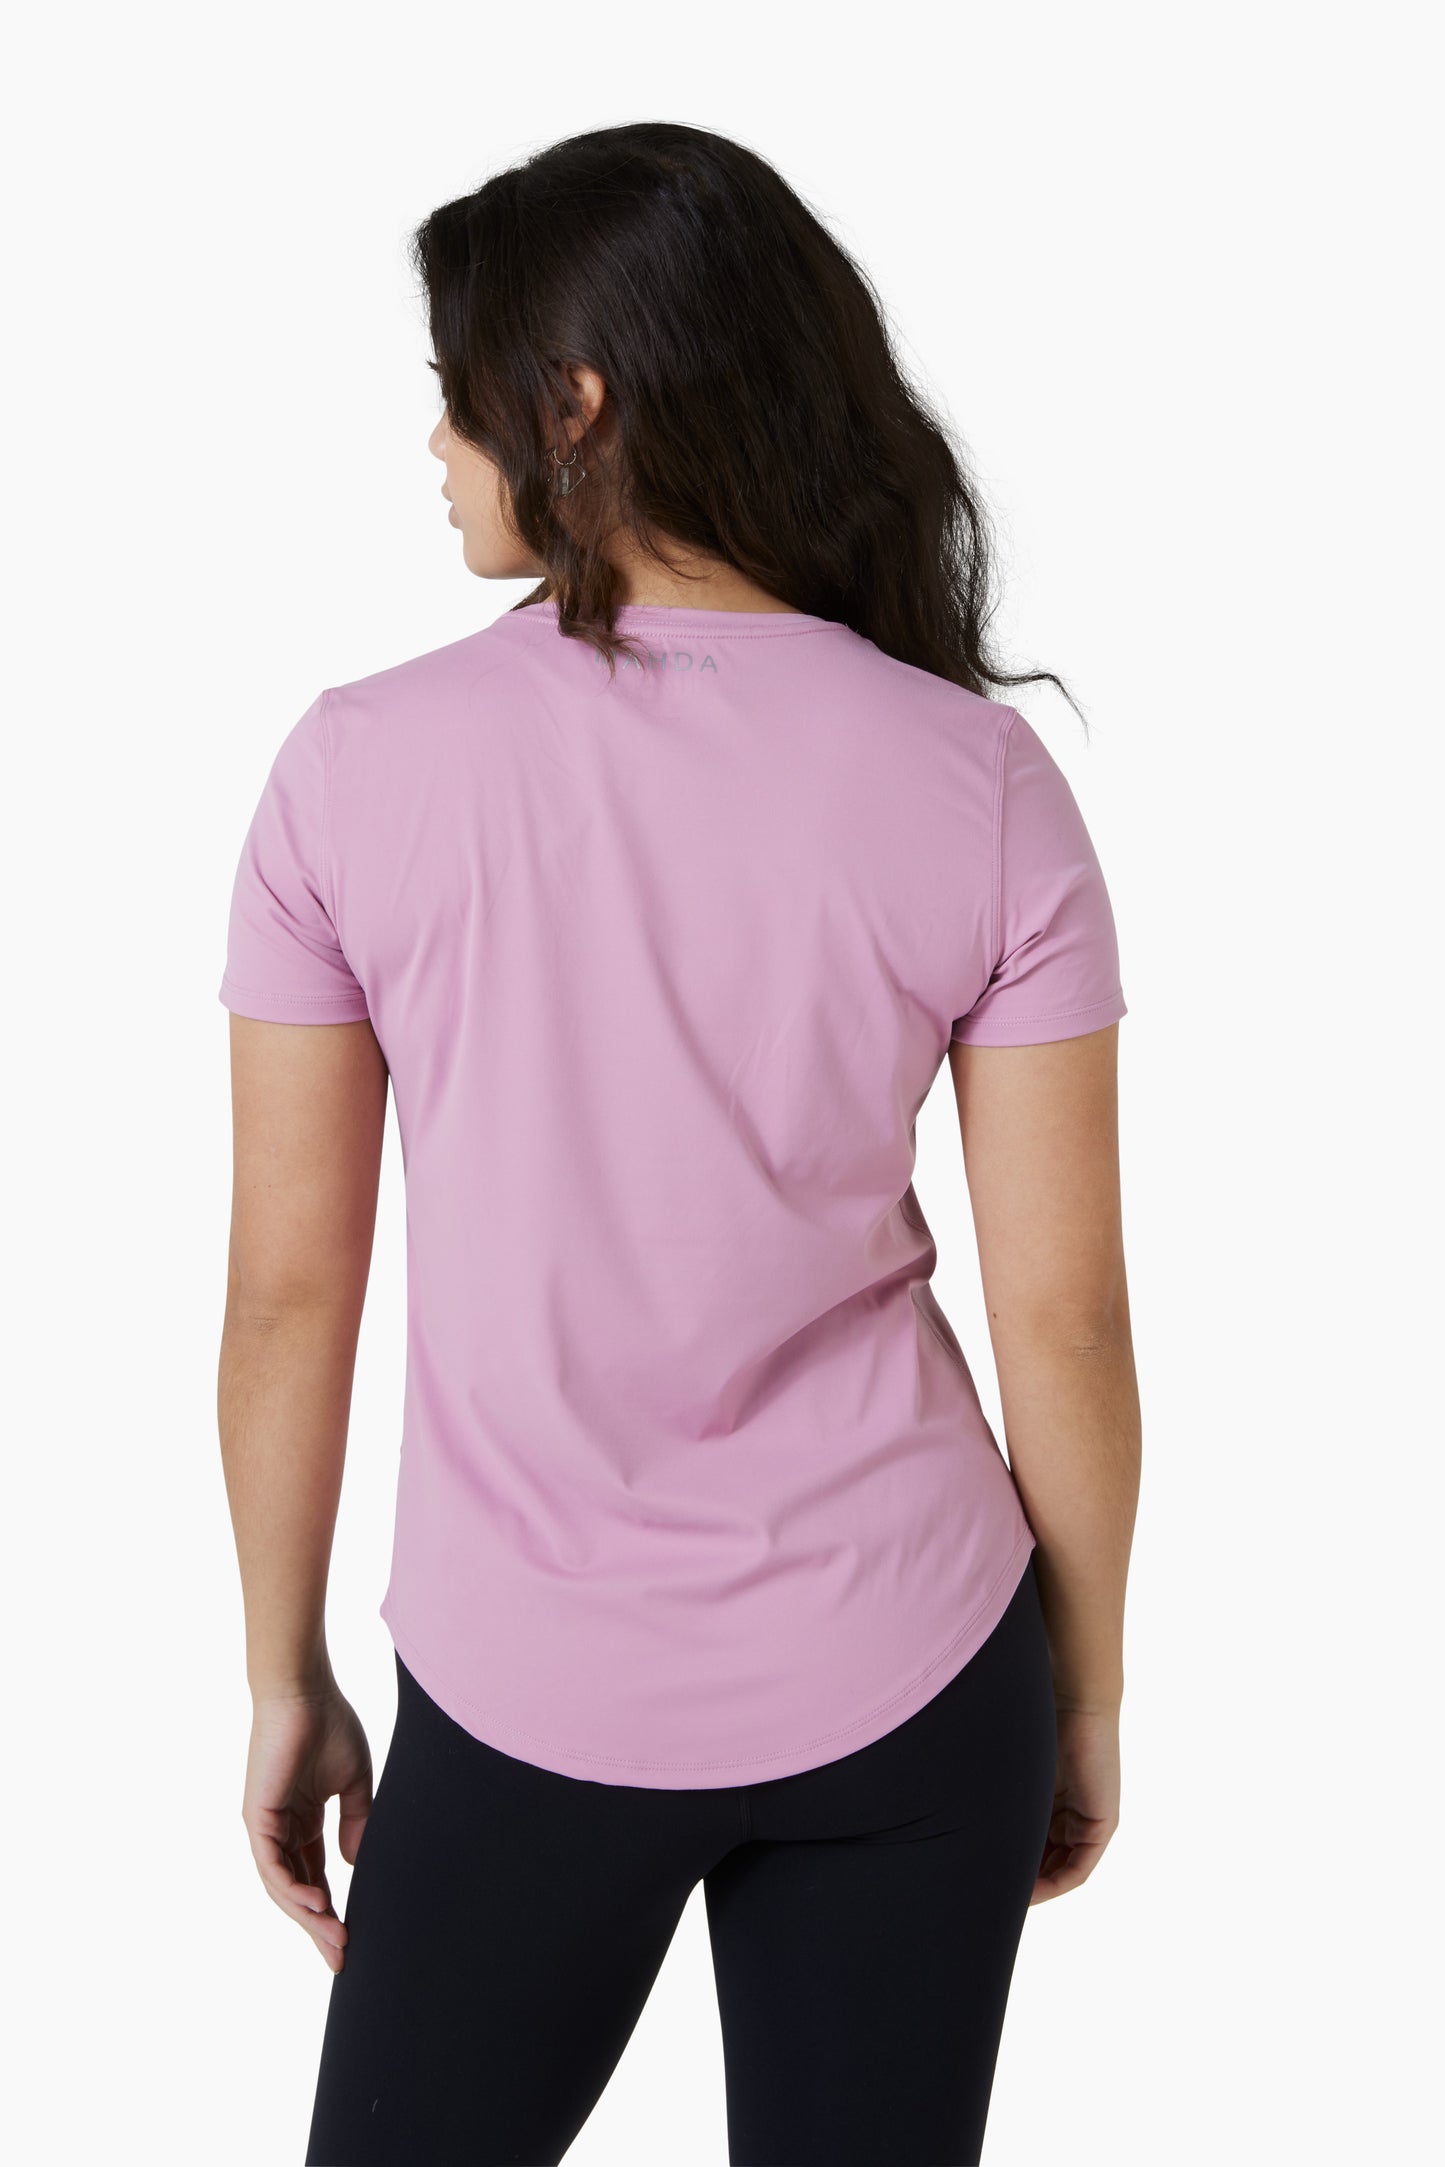 Woman t-shirt pink